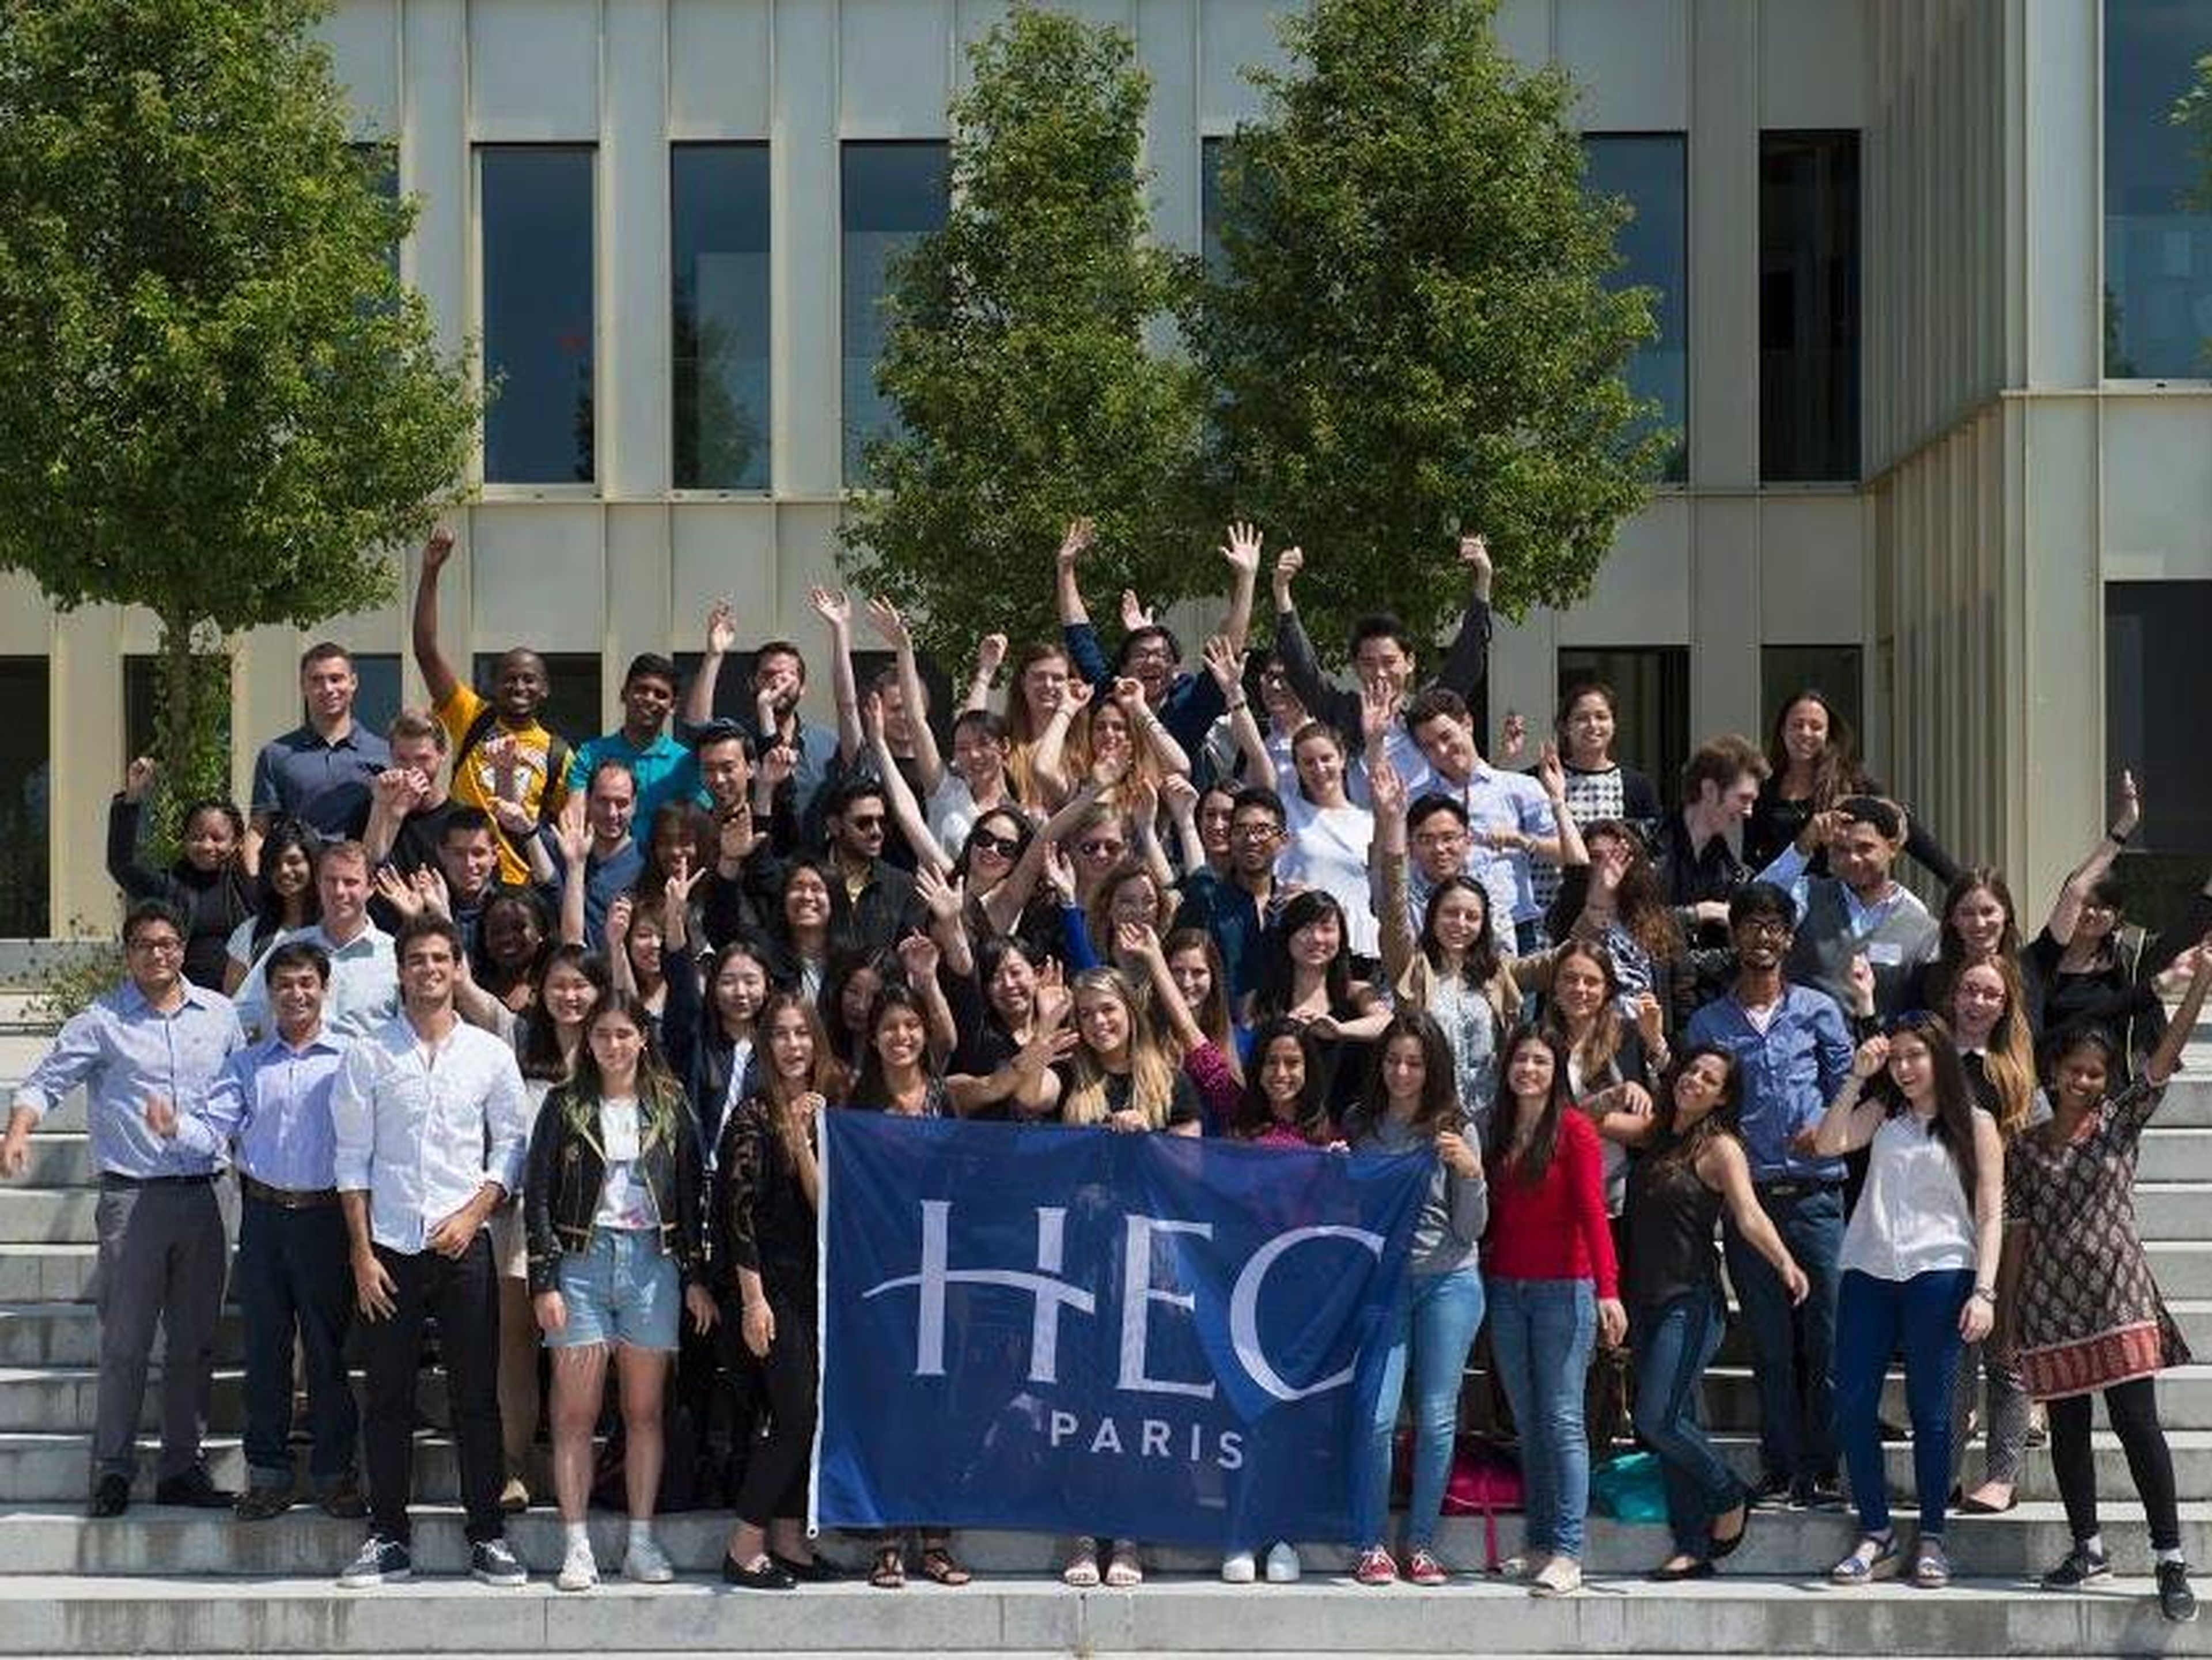 7. HEC Paris grads earn an average post-graduation salary of $120K to $130K.